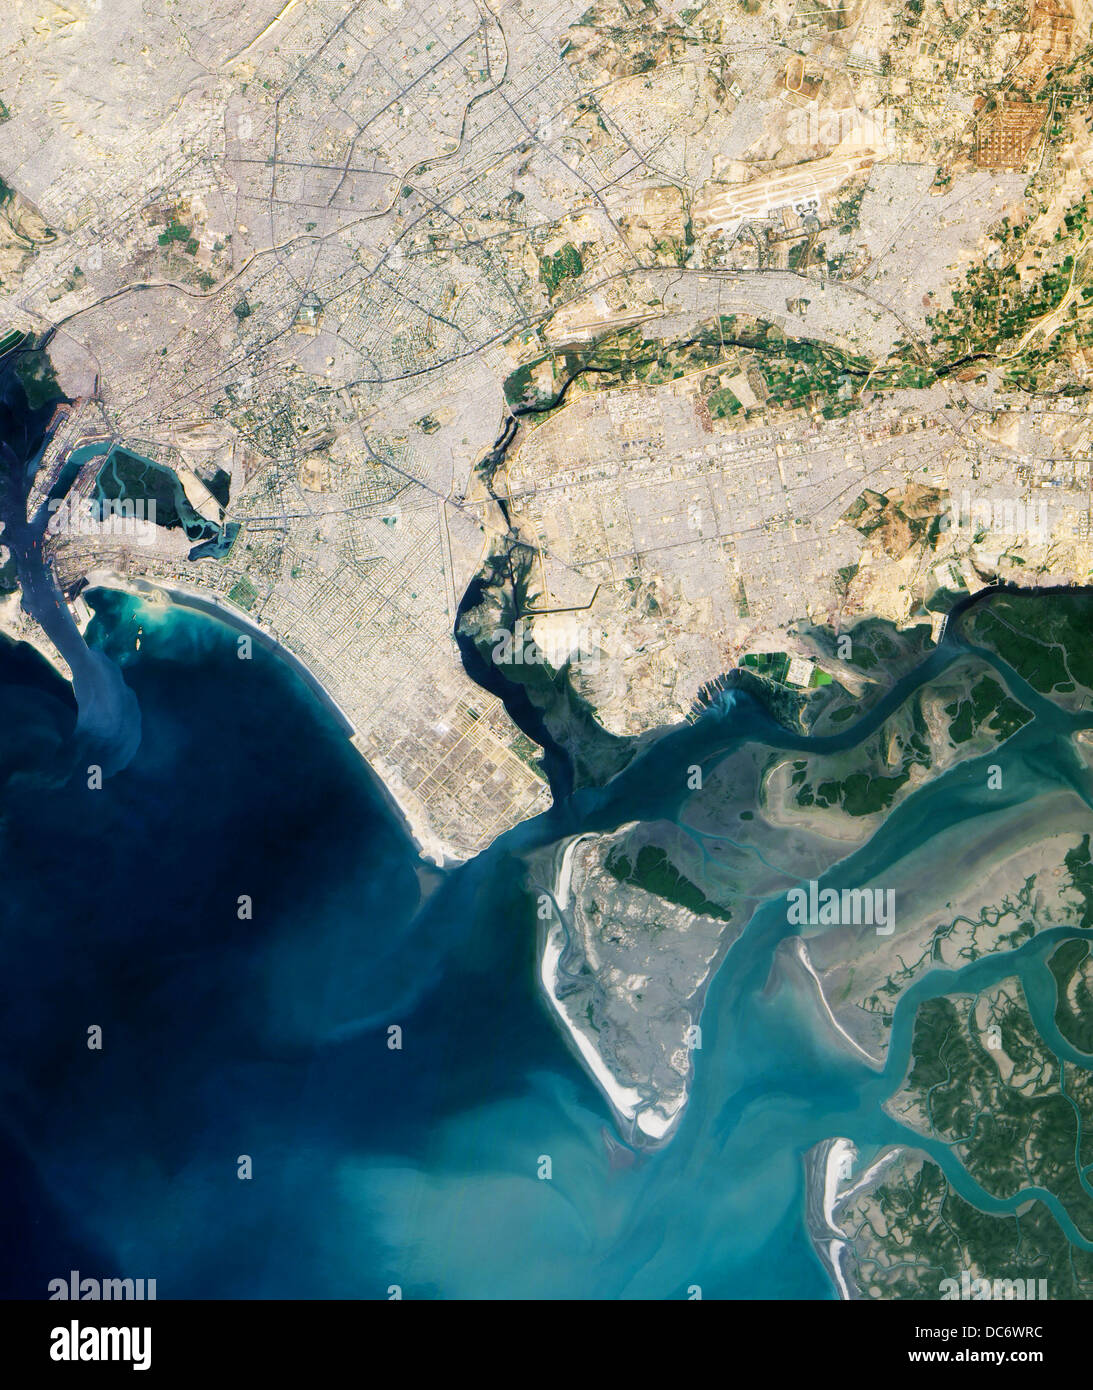 Satellitenansicht von Karachi, Pakistan Stockfoto